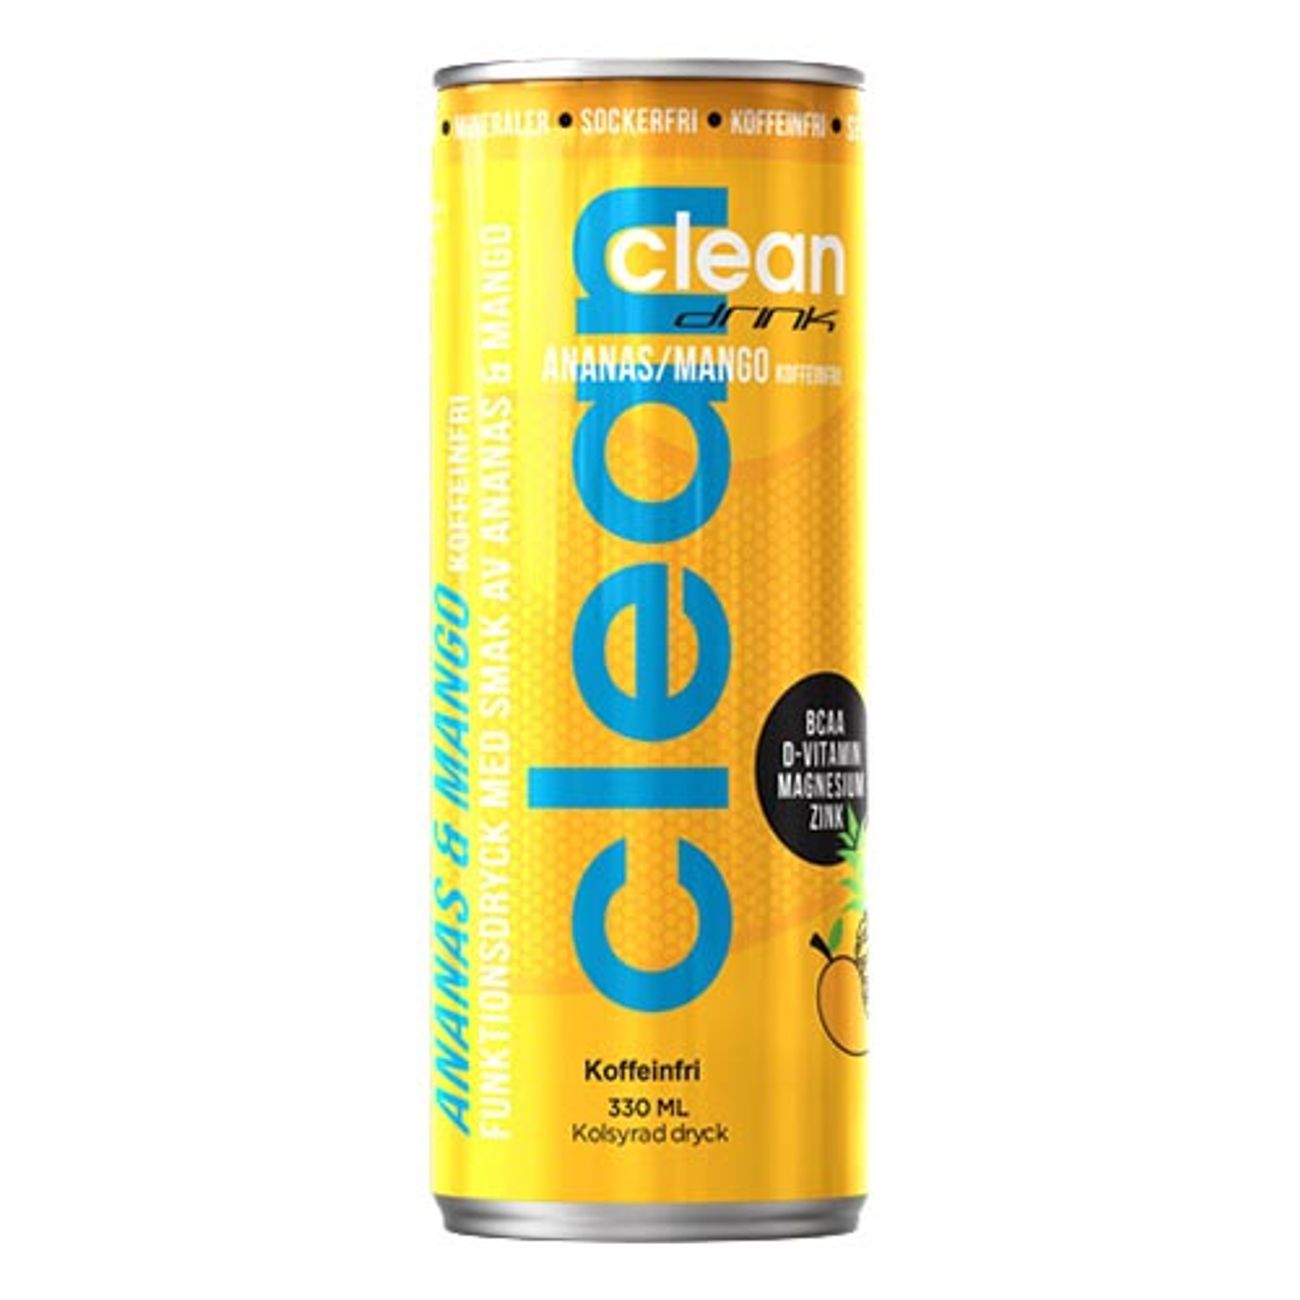 cleandrink-ananasmango-koffeinfri-1